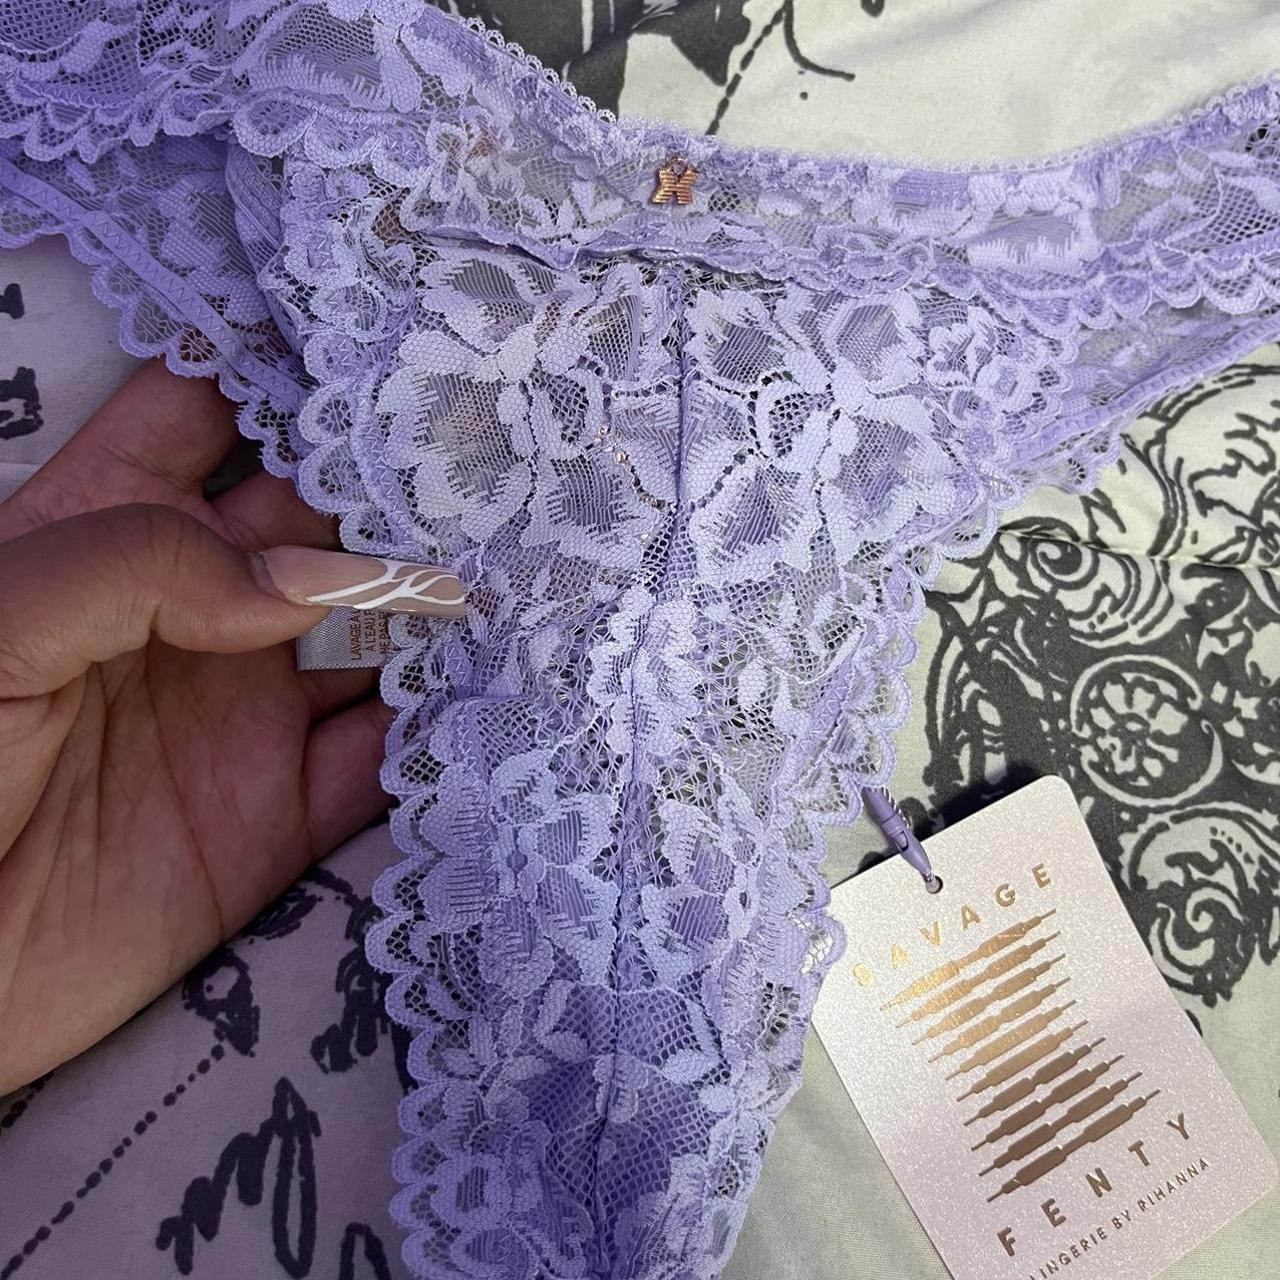 Savage X lace bra in a purple/lavender color. Size - Depop